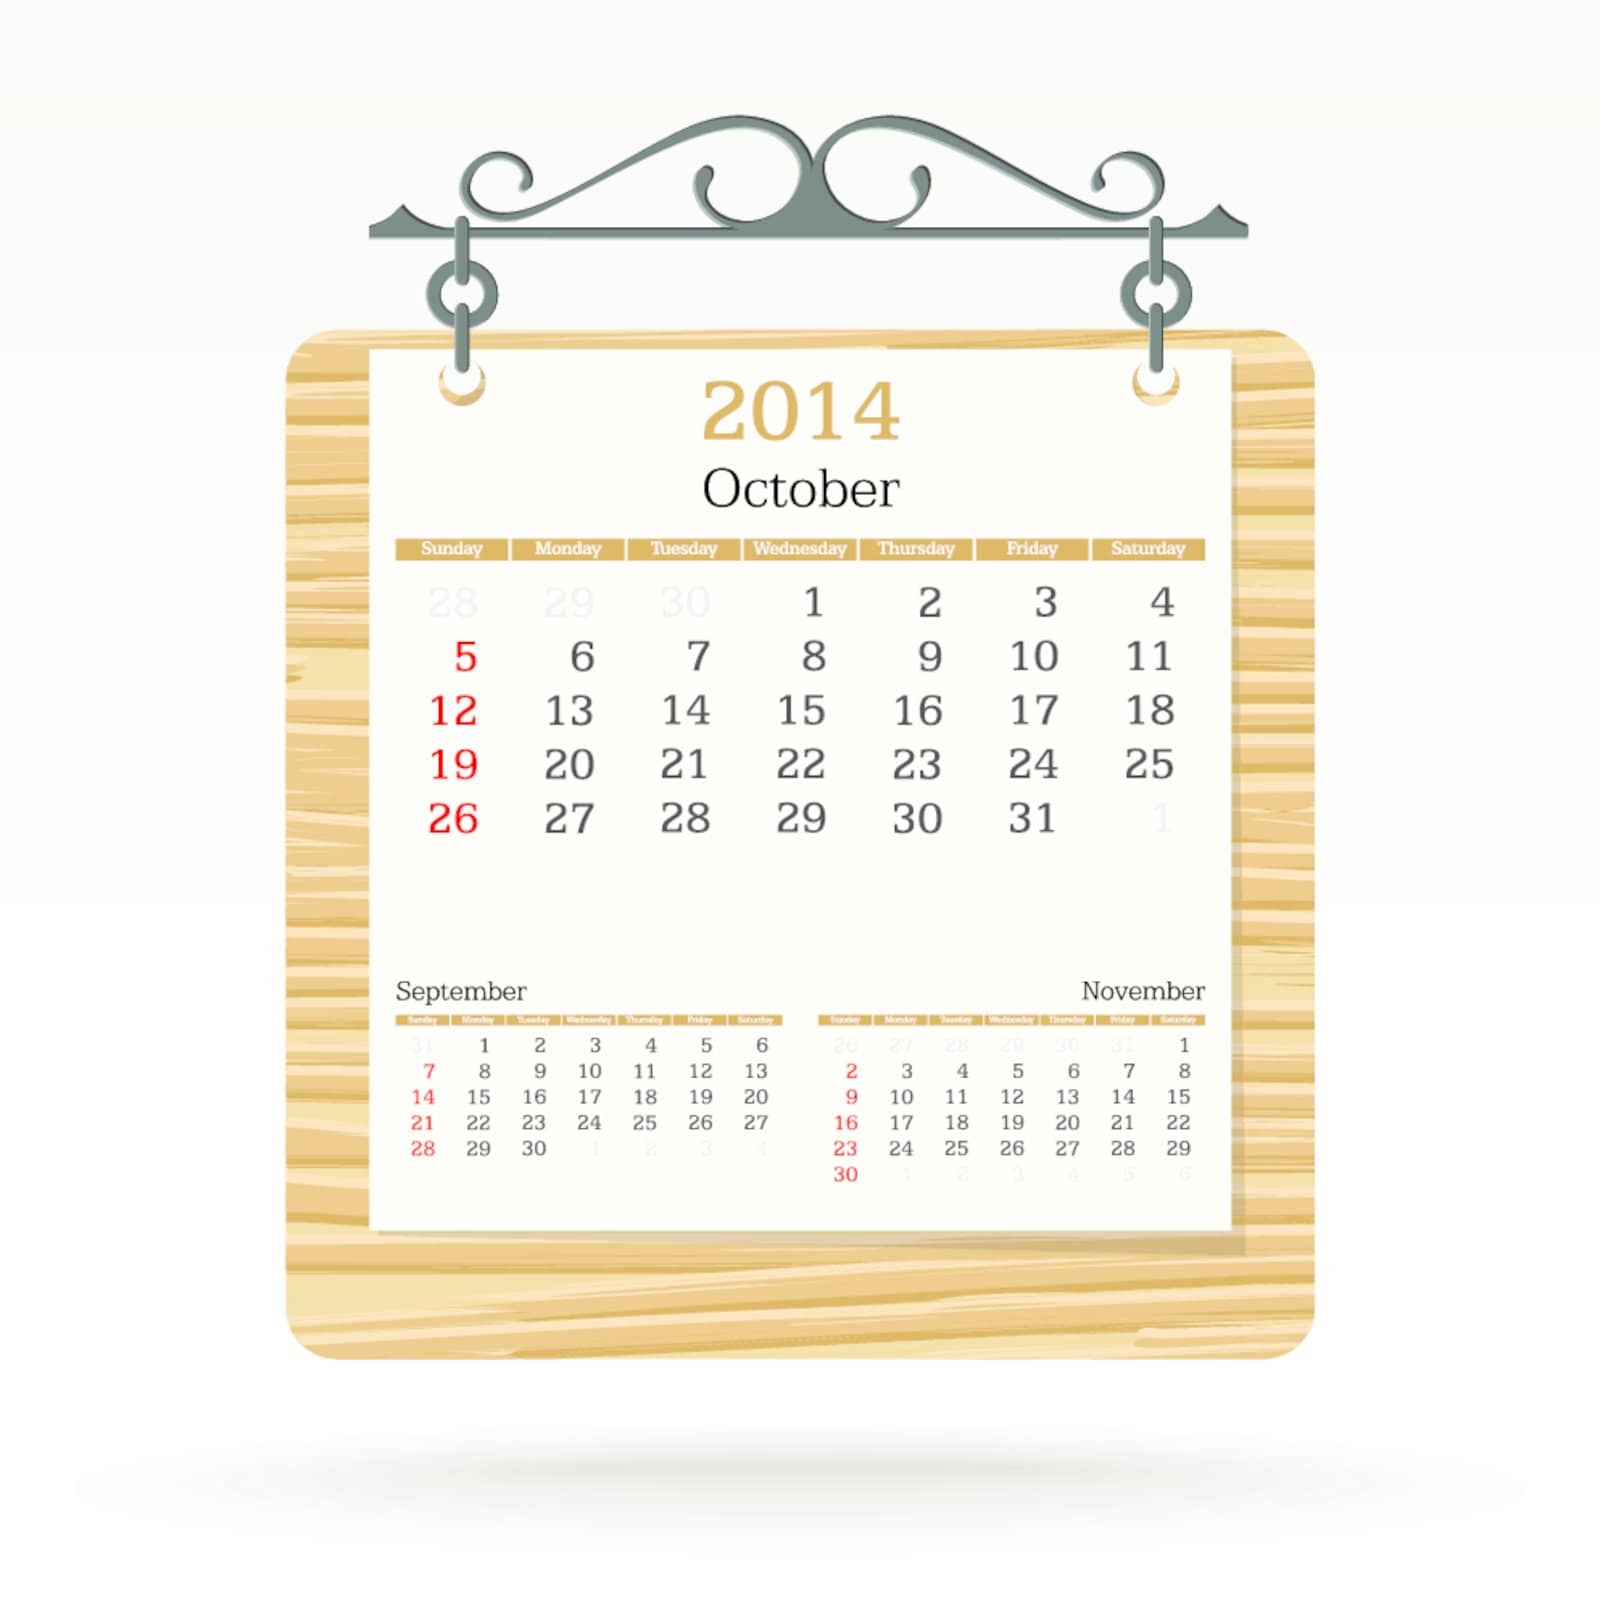 october 2014 - calendar by ojal